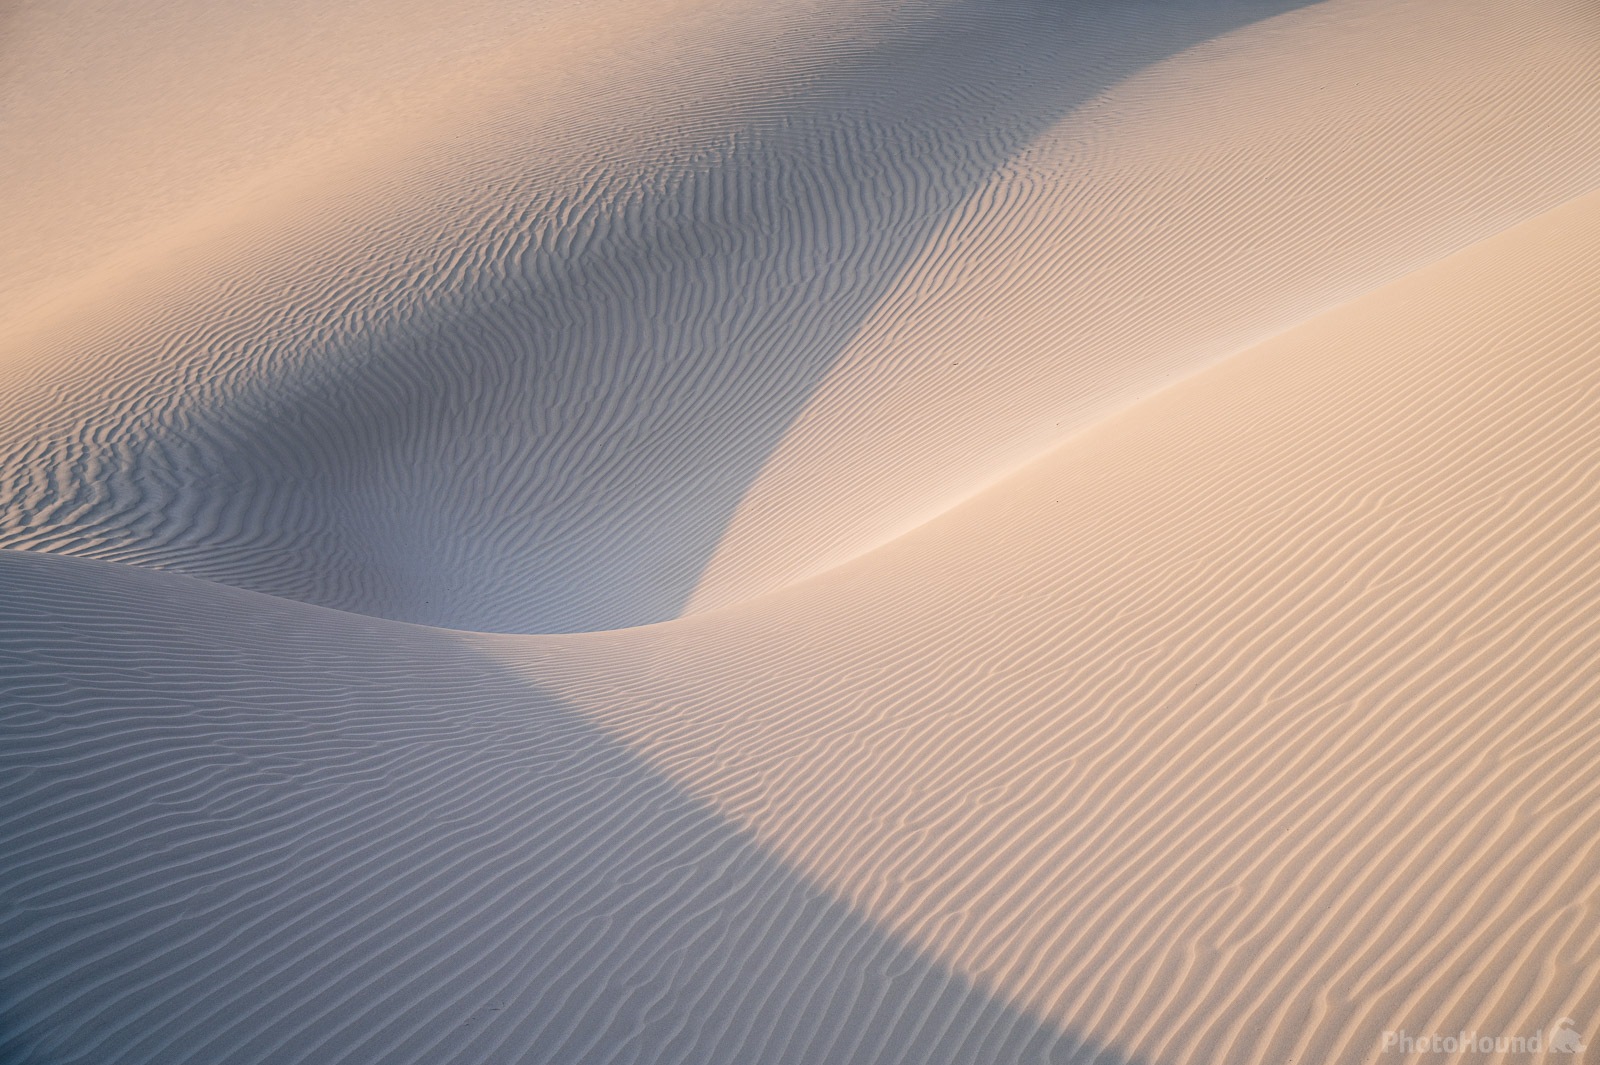 Arher Sand Dunes, Socotra